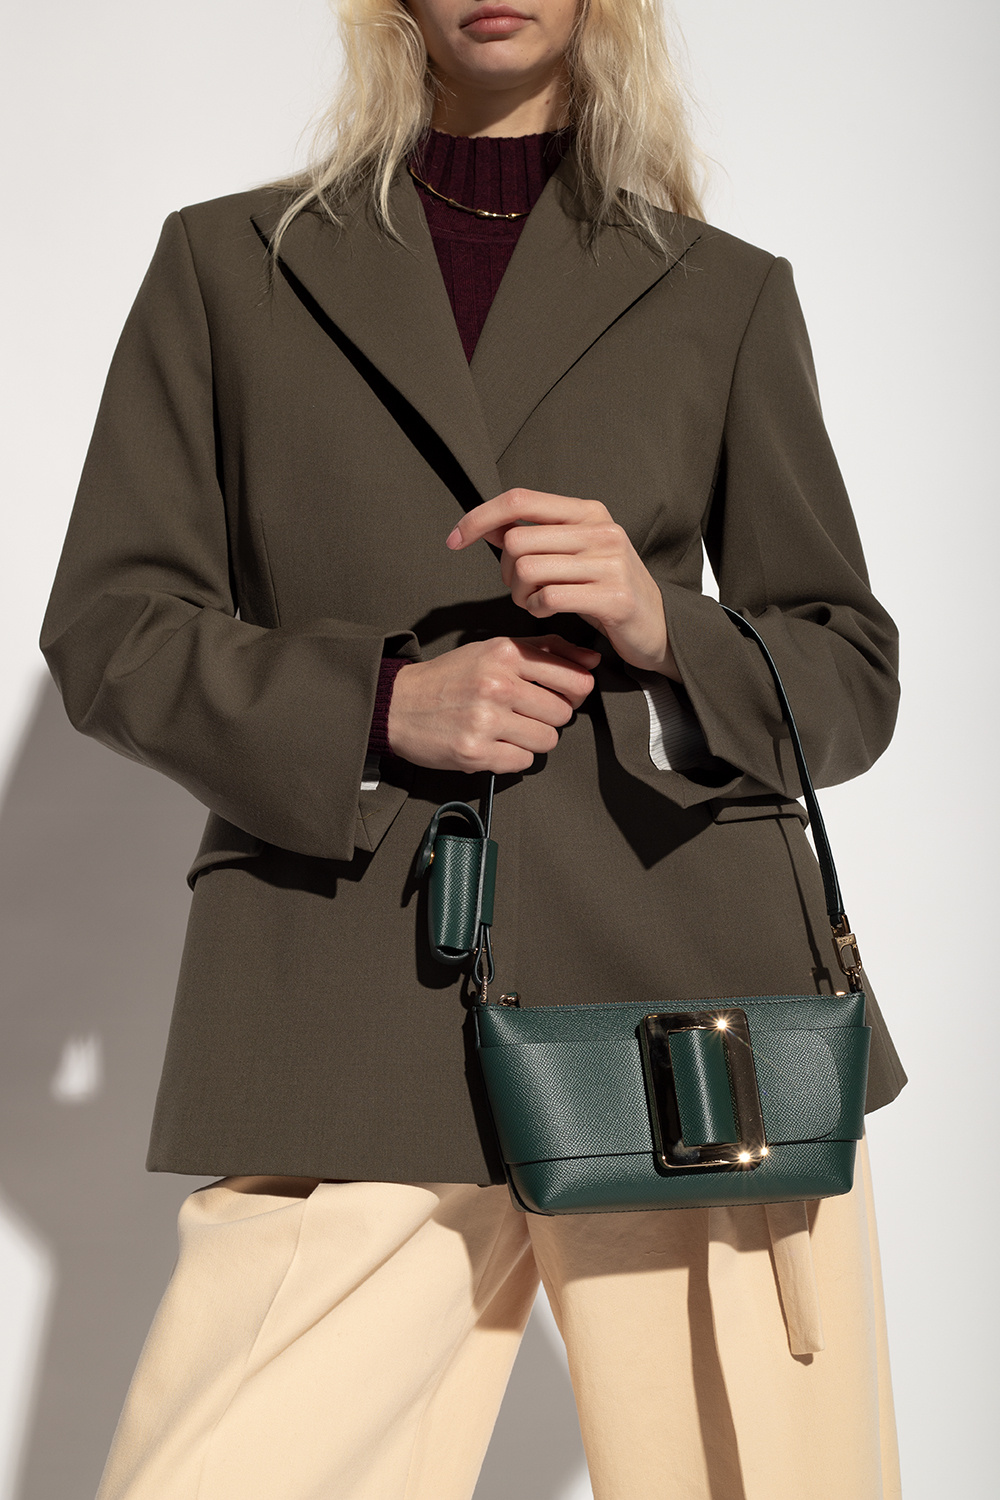 Totes bags Boyy - Buckle pouchette leather handbag